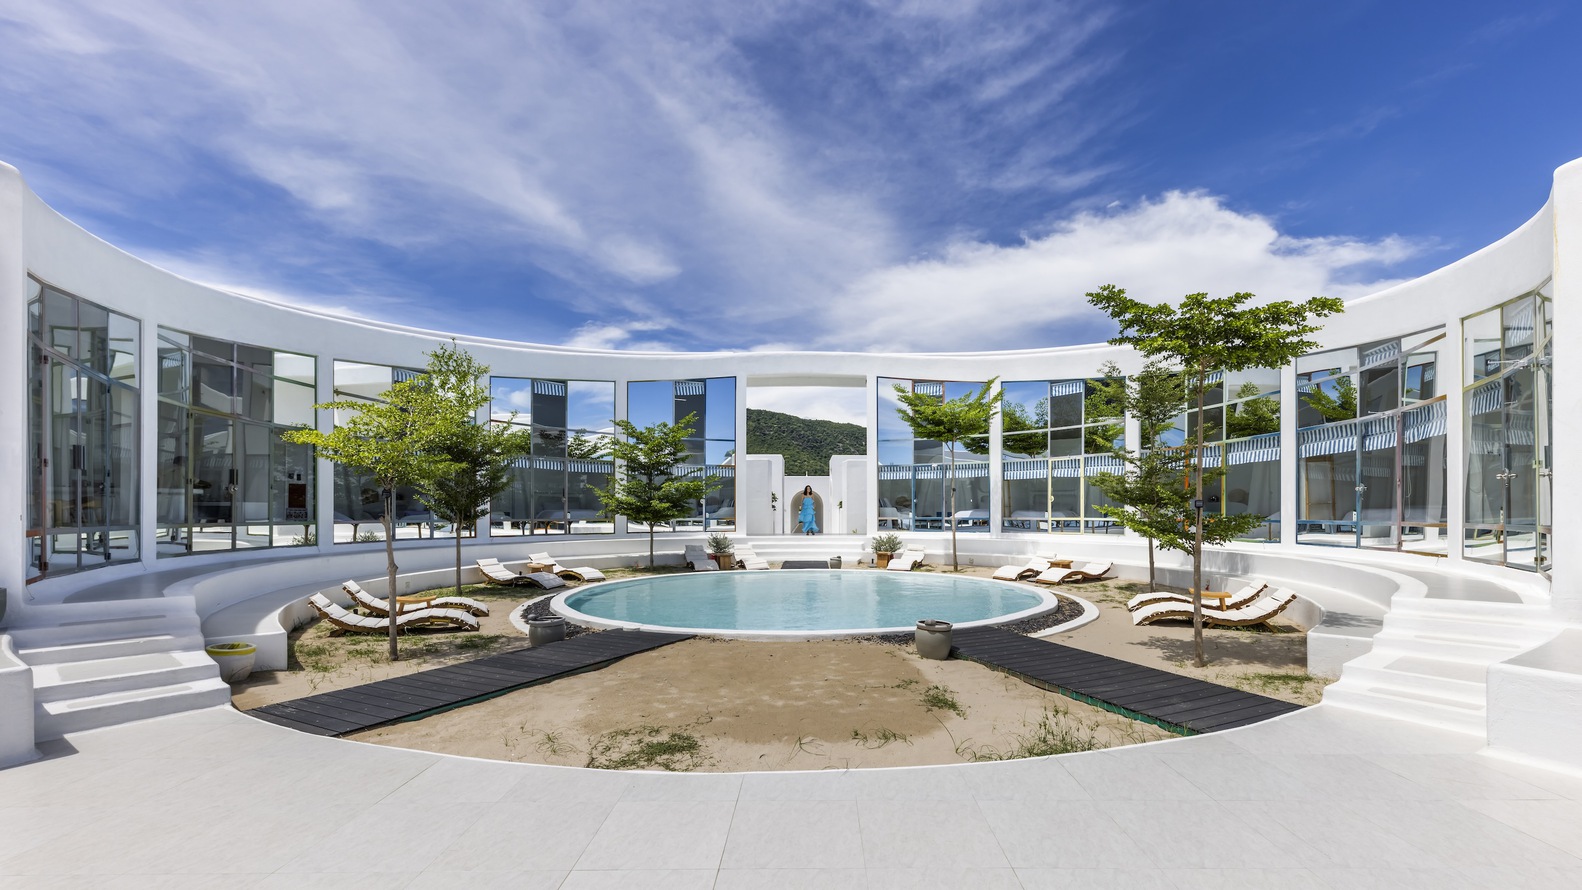 iSea Boutique Resort/Pham Huu Son Architects